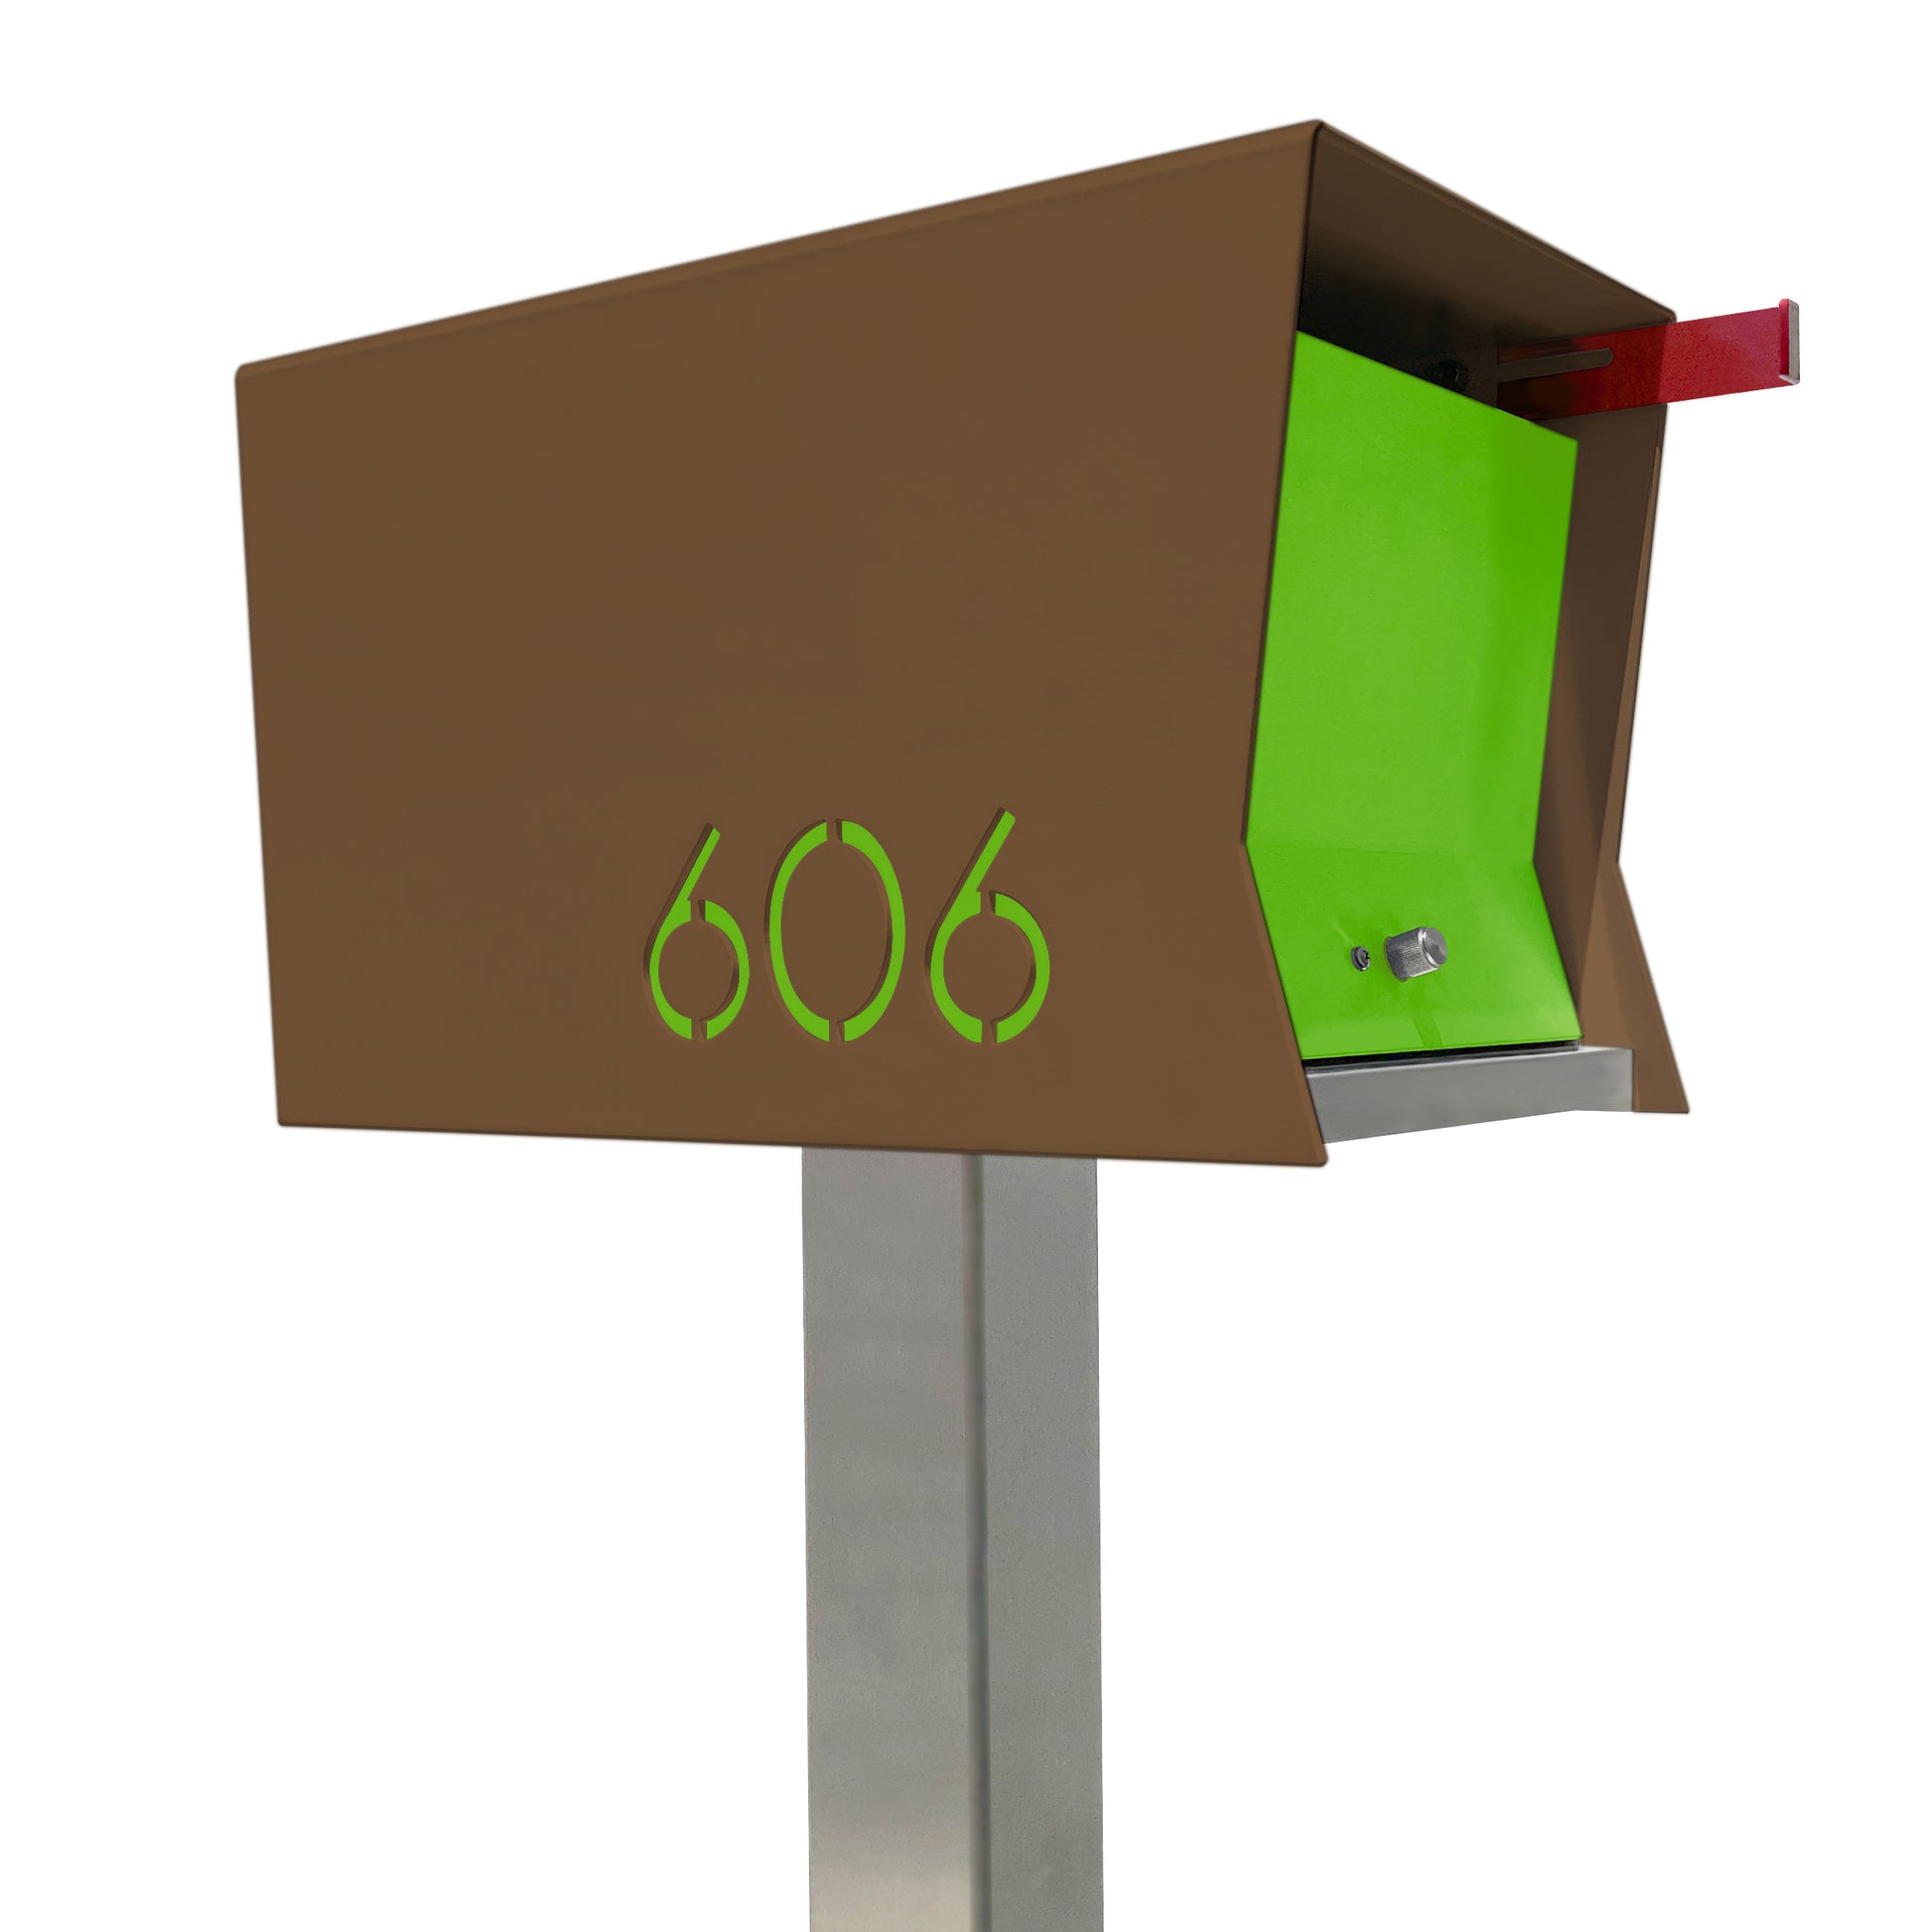 The Original Retrobox in COCONUT - Modern Mailbox brown and green